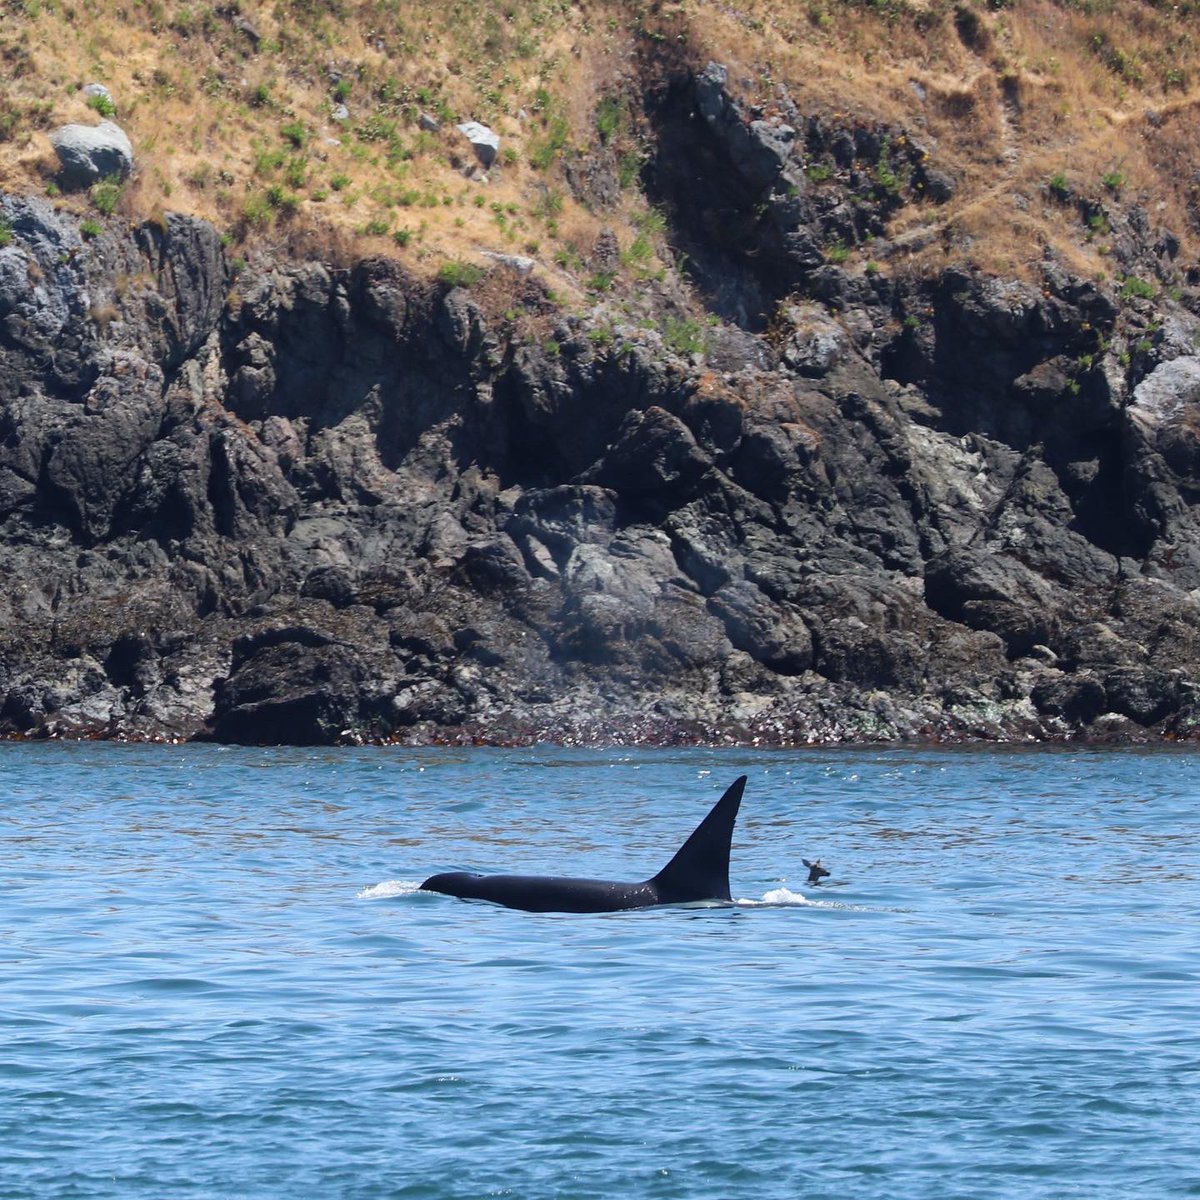 Spot the deer🦌 Bigg’s killer whale T124C “Cooper” encountered a black-tailed deer yesterday near Battleship Island! 

📷 PC: Naturalist Sam Murphy 

#islandadventures #orca #deer #whalewatch #salishsea